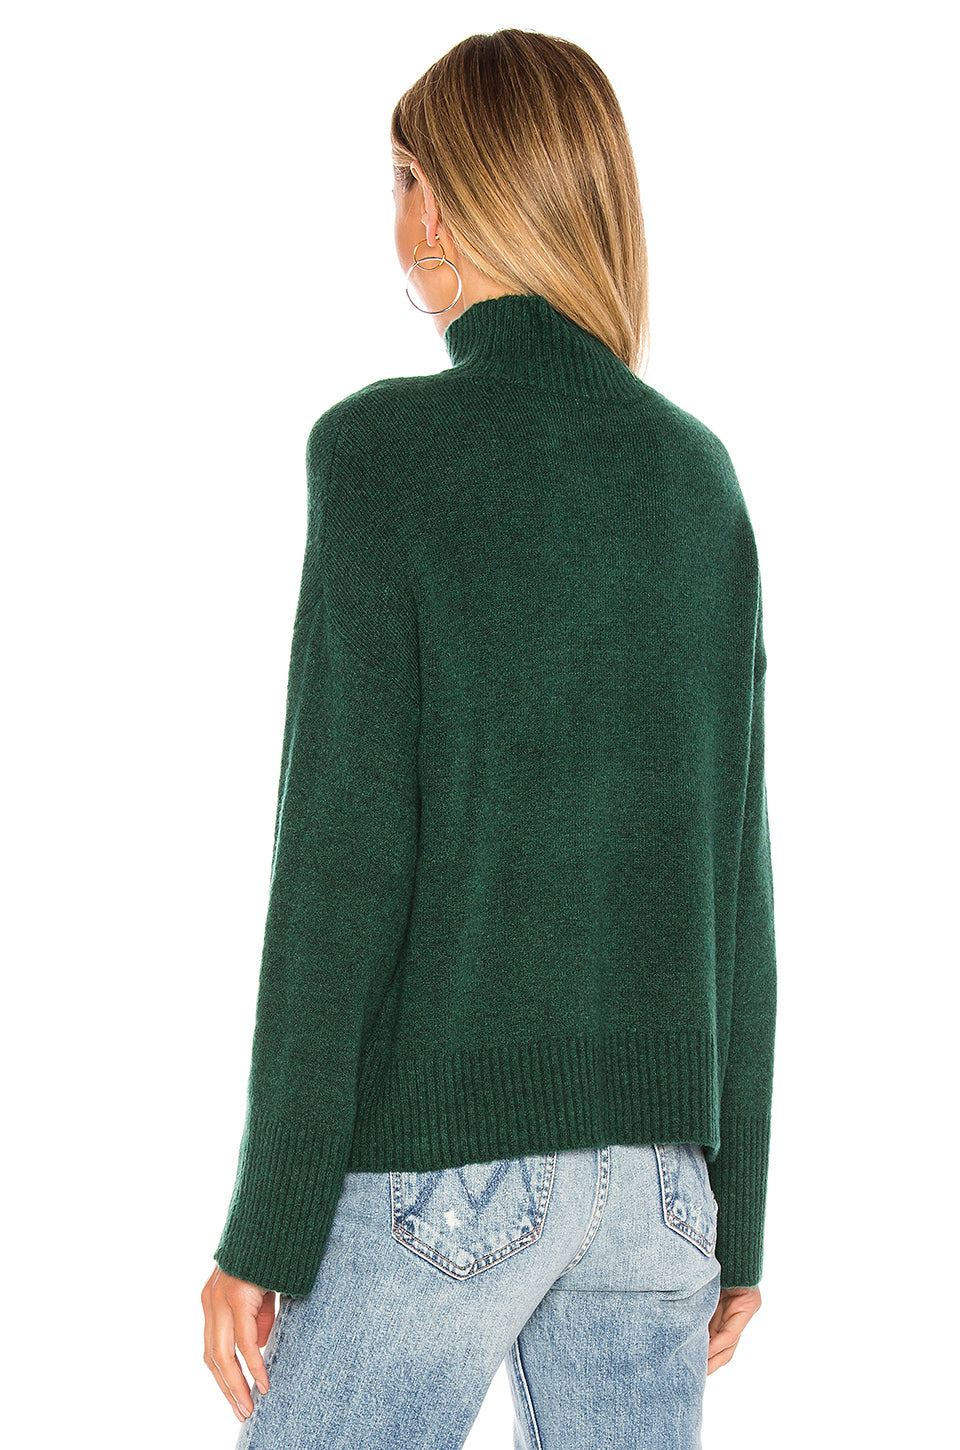 Marlowe Sweater in GREEN